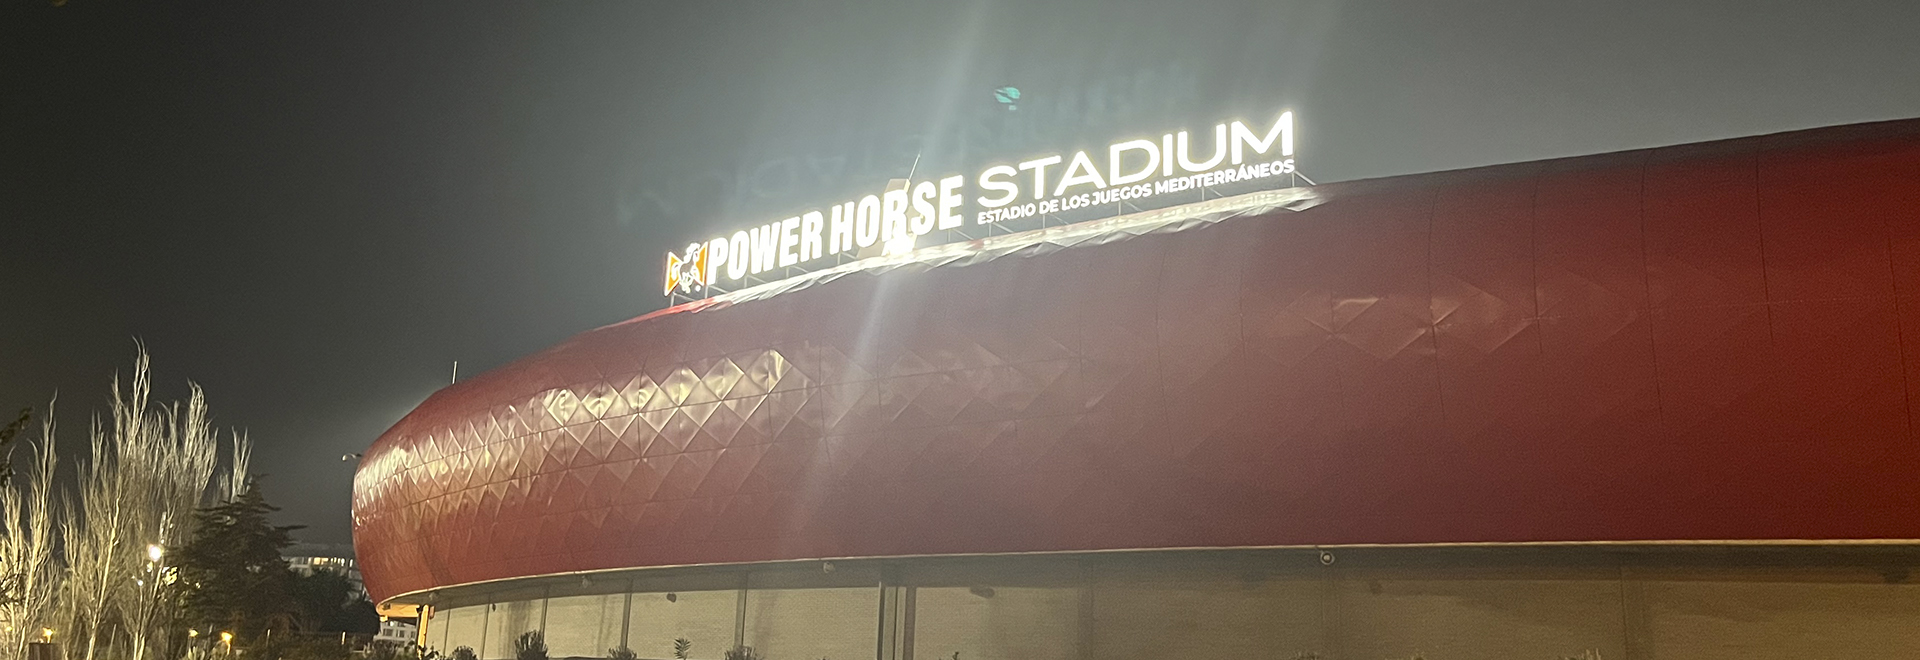 Power Horse Stadium